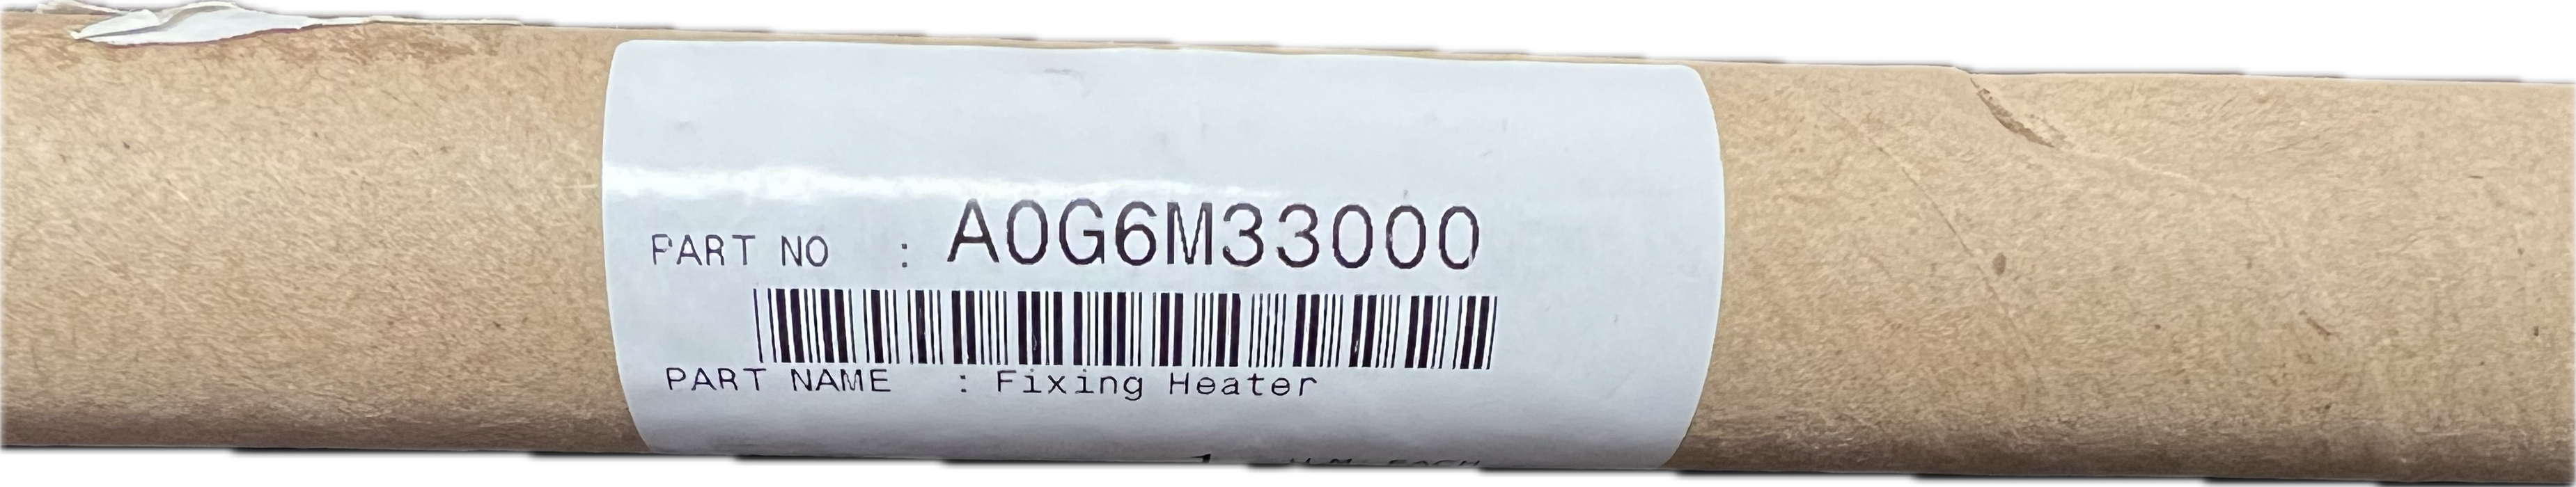 Konica Minolta Fixing Heater | A0G6M33000